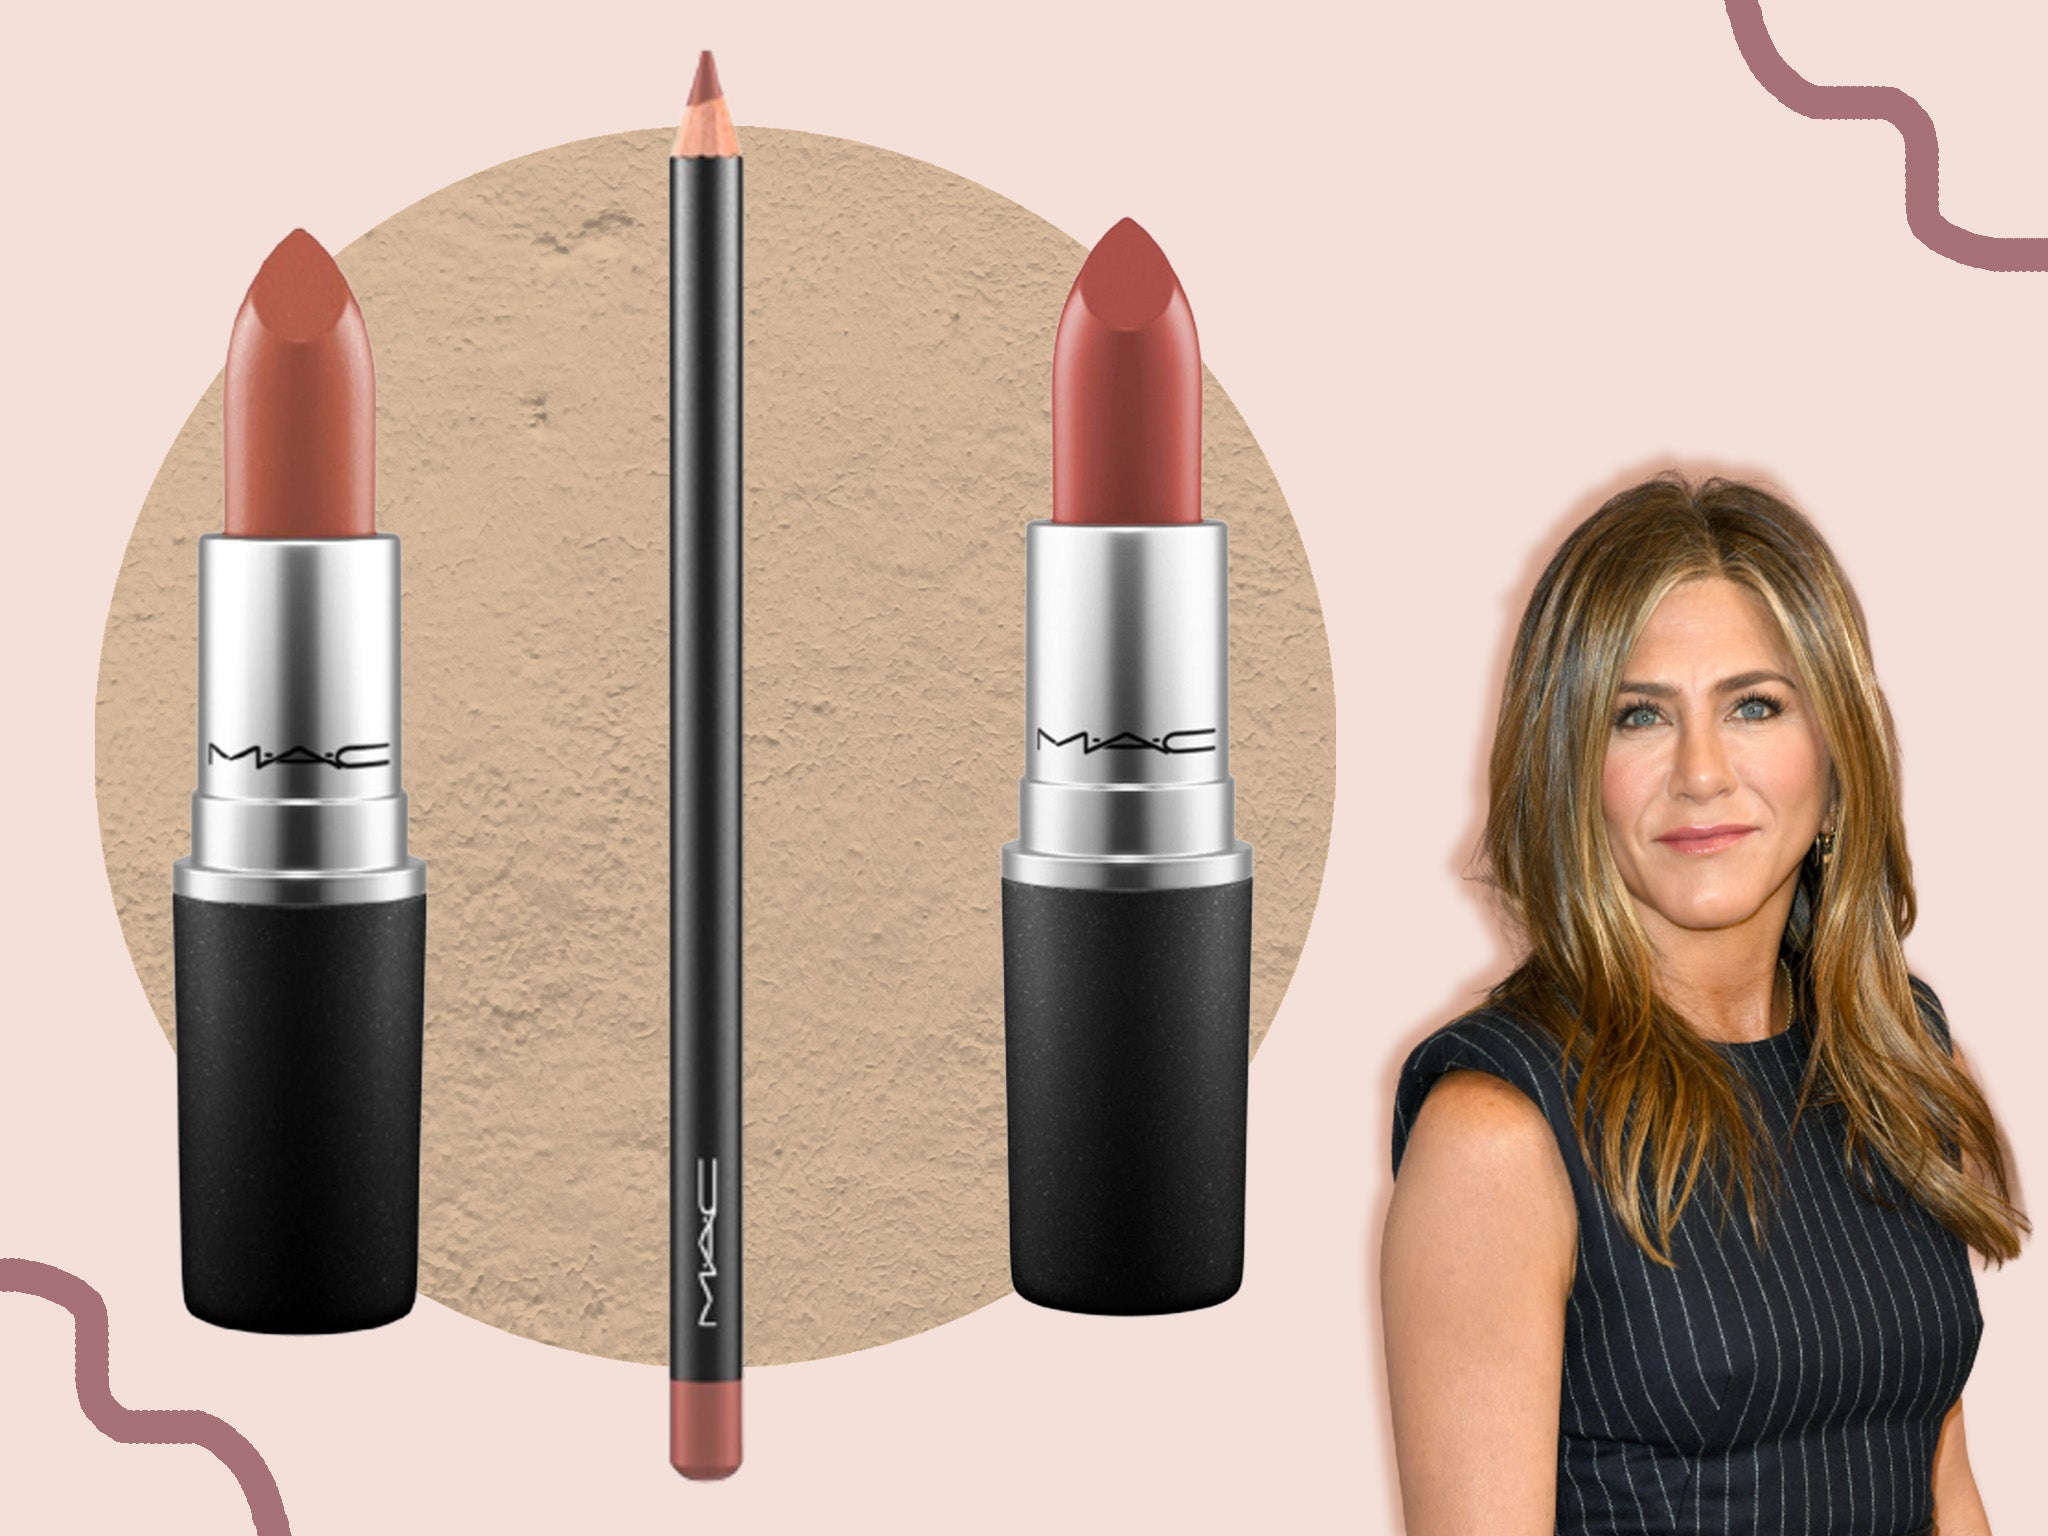 Jennifer Aniston wore these Mac lipsticks as Rachel Green in